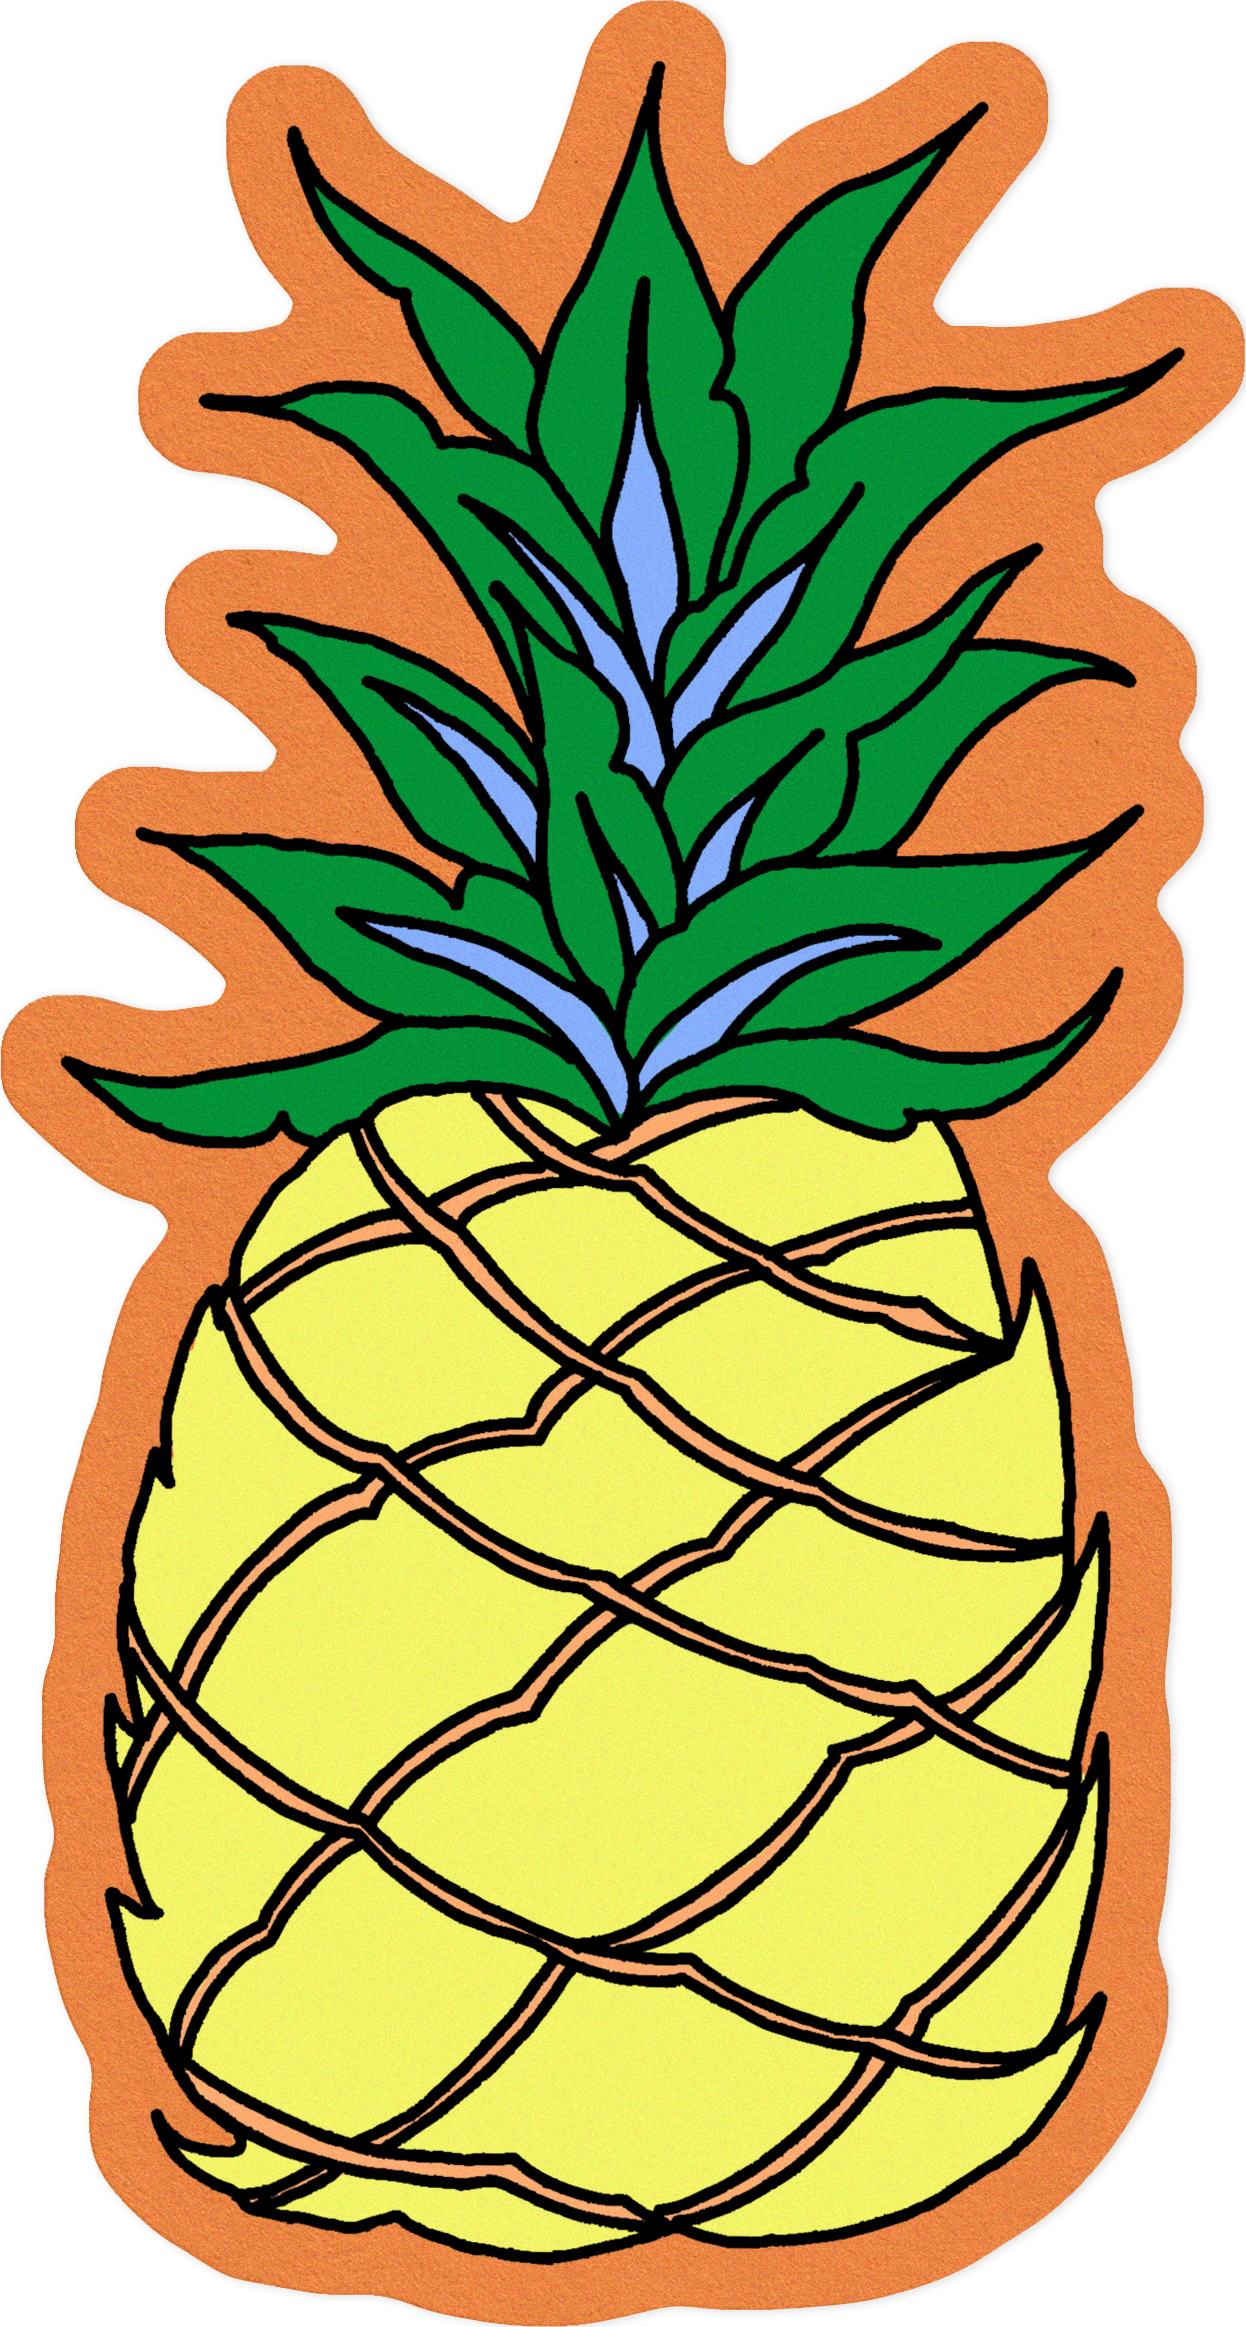 Pineapple sticker